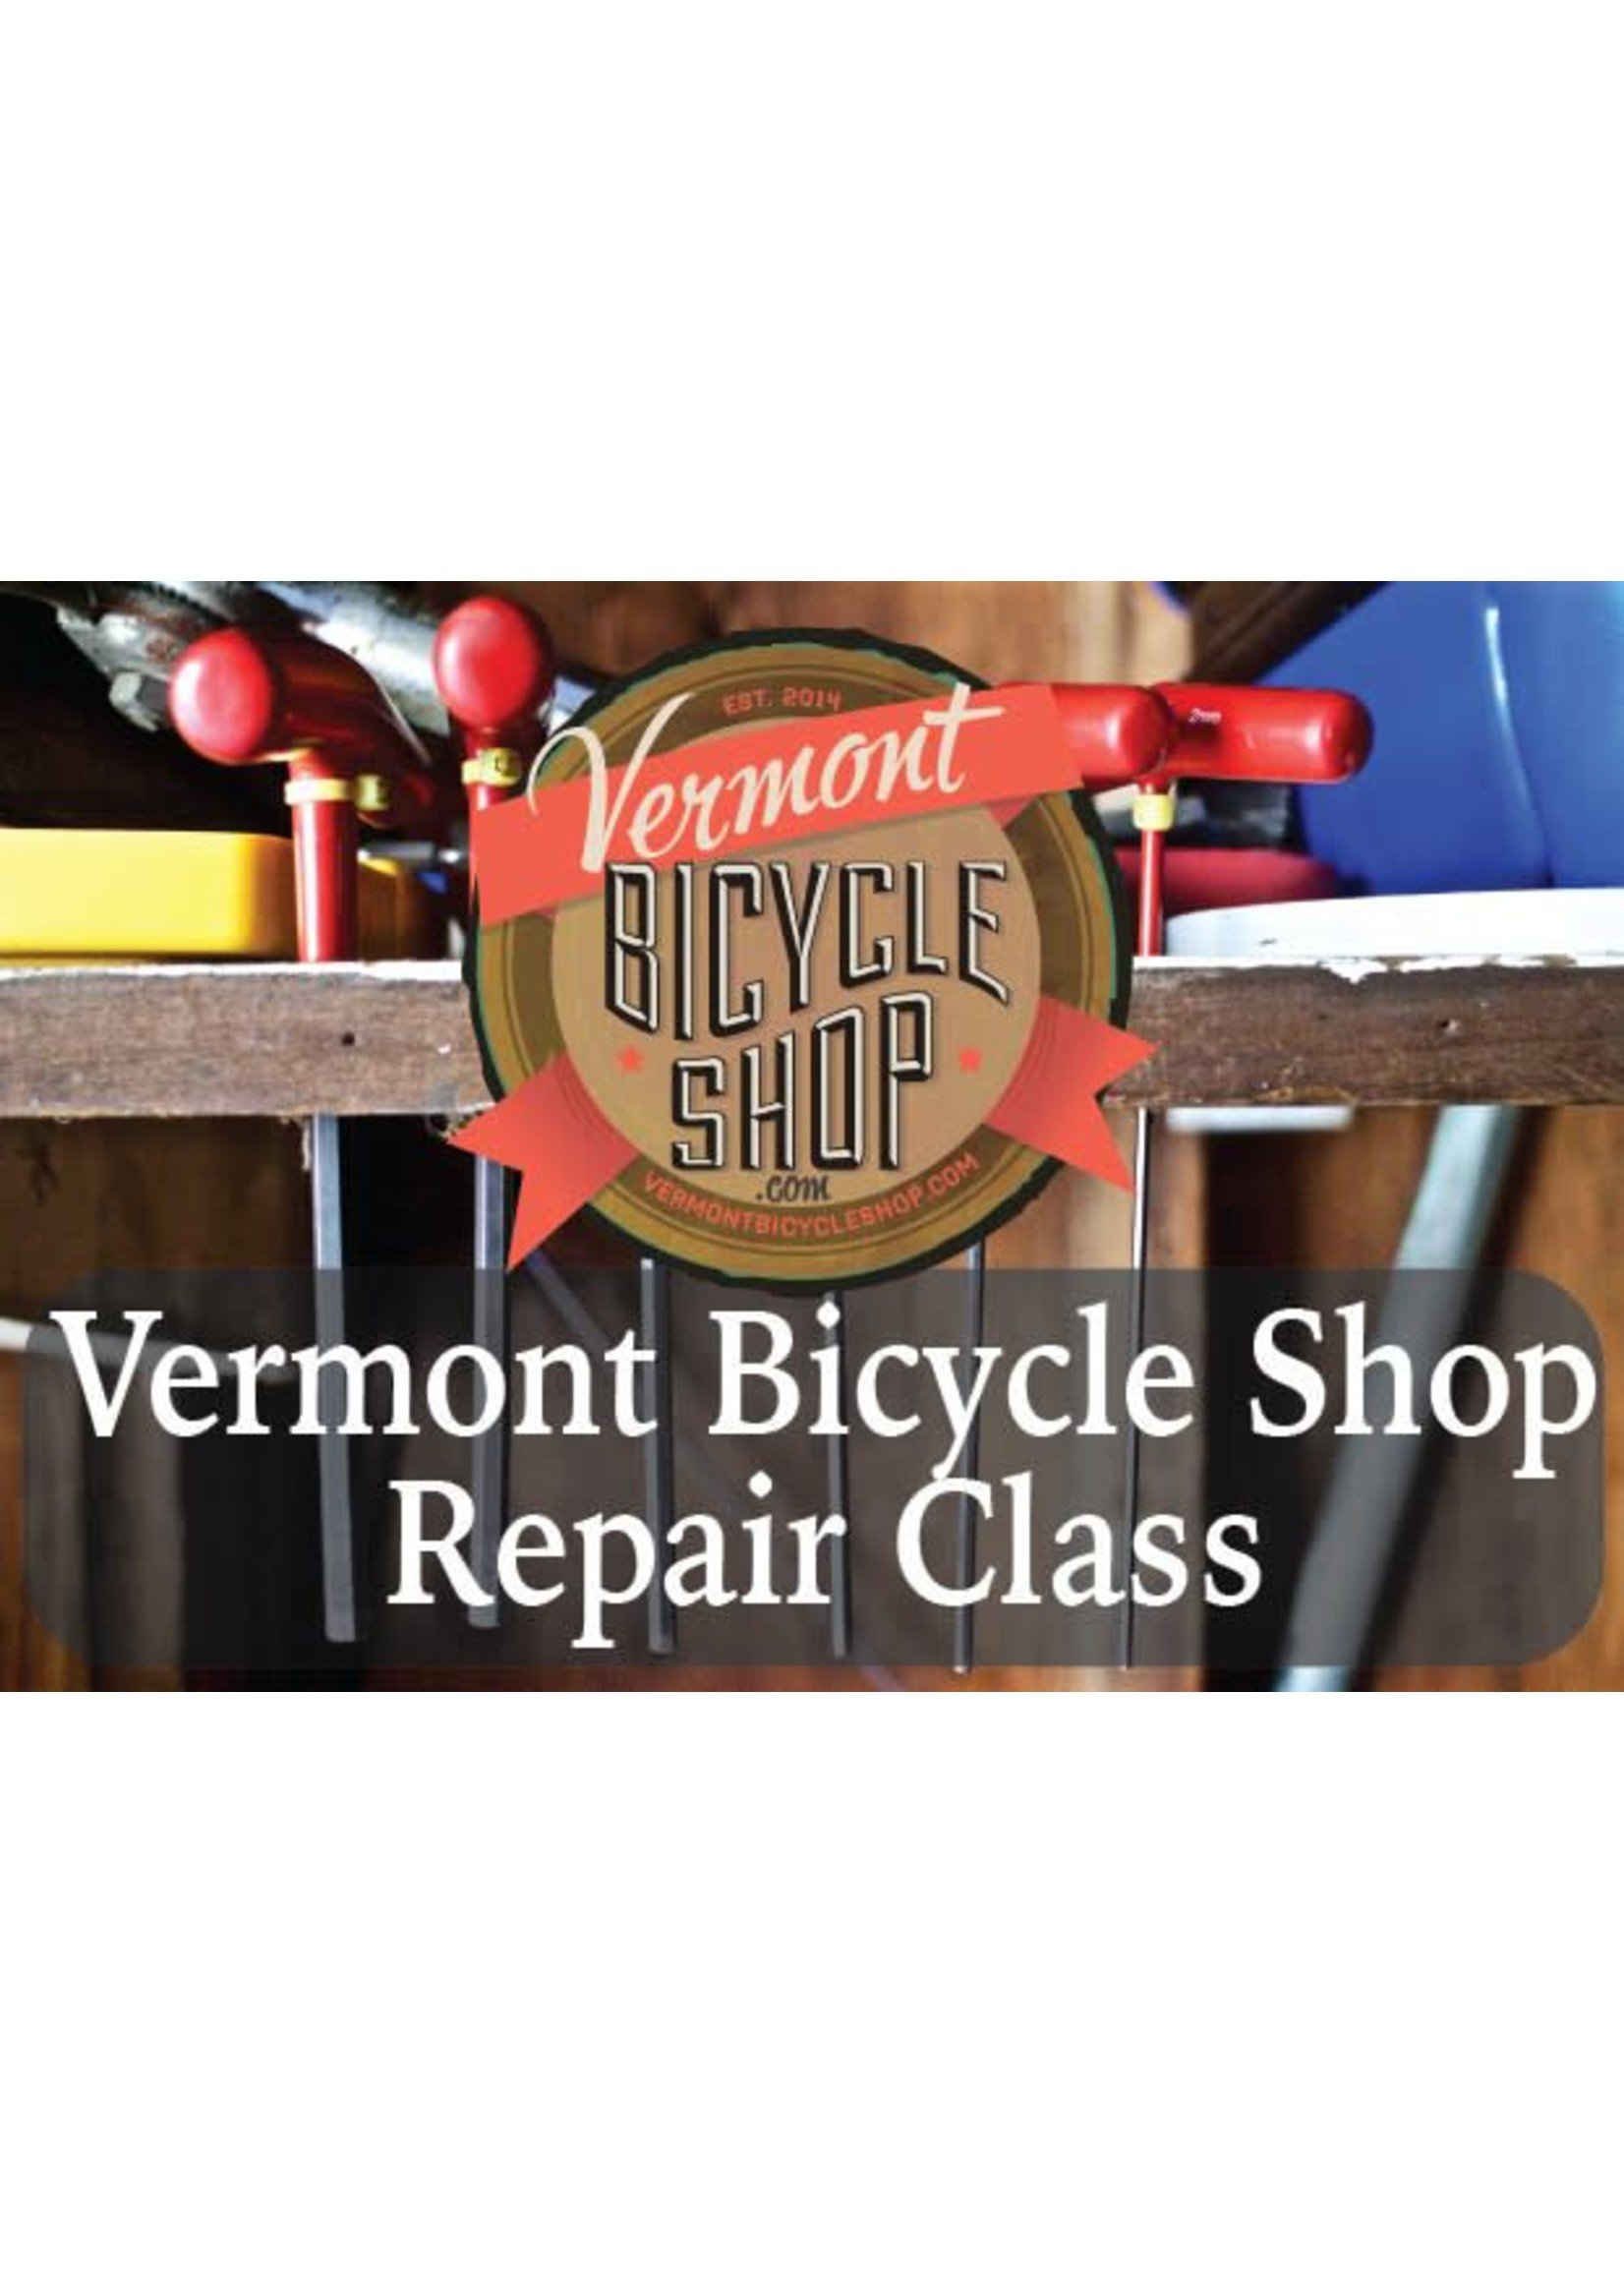 Vermont Bicycle Shop 2018 Bicycle Shop Repair Classes